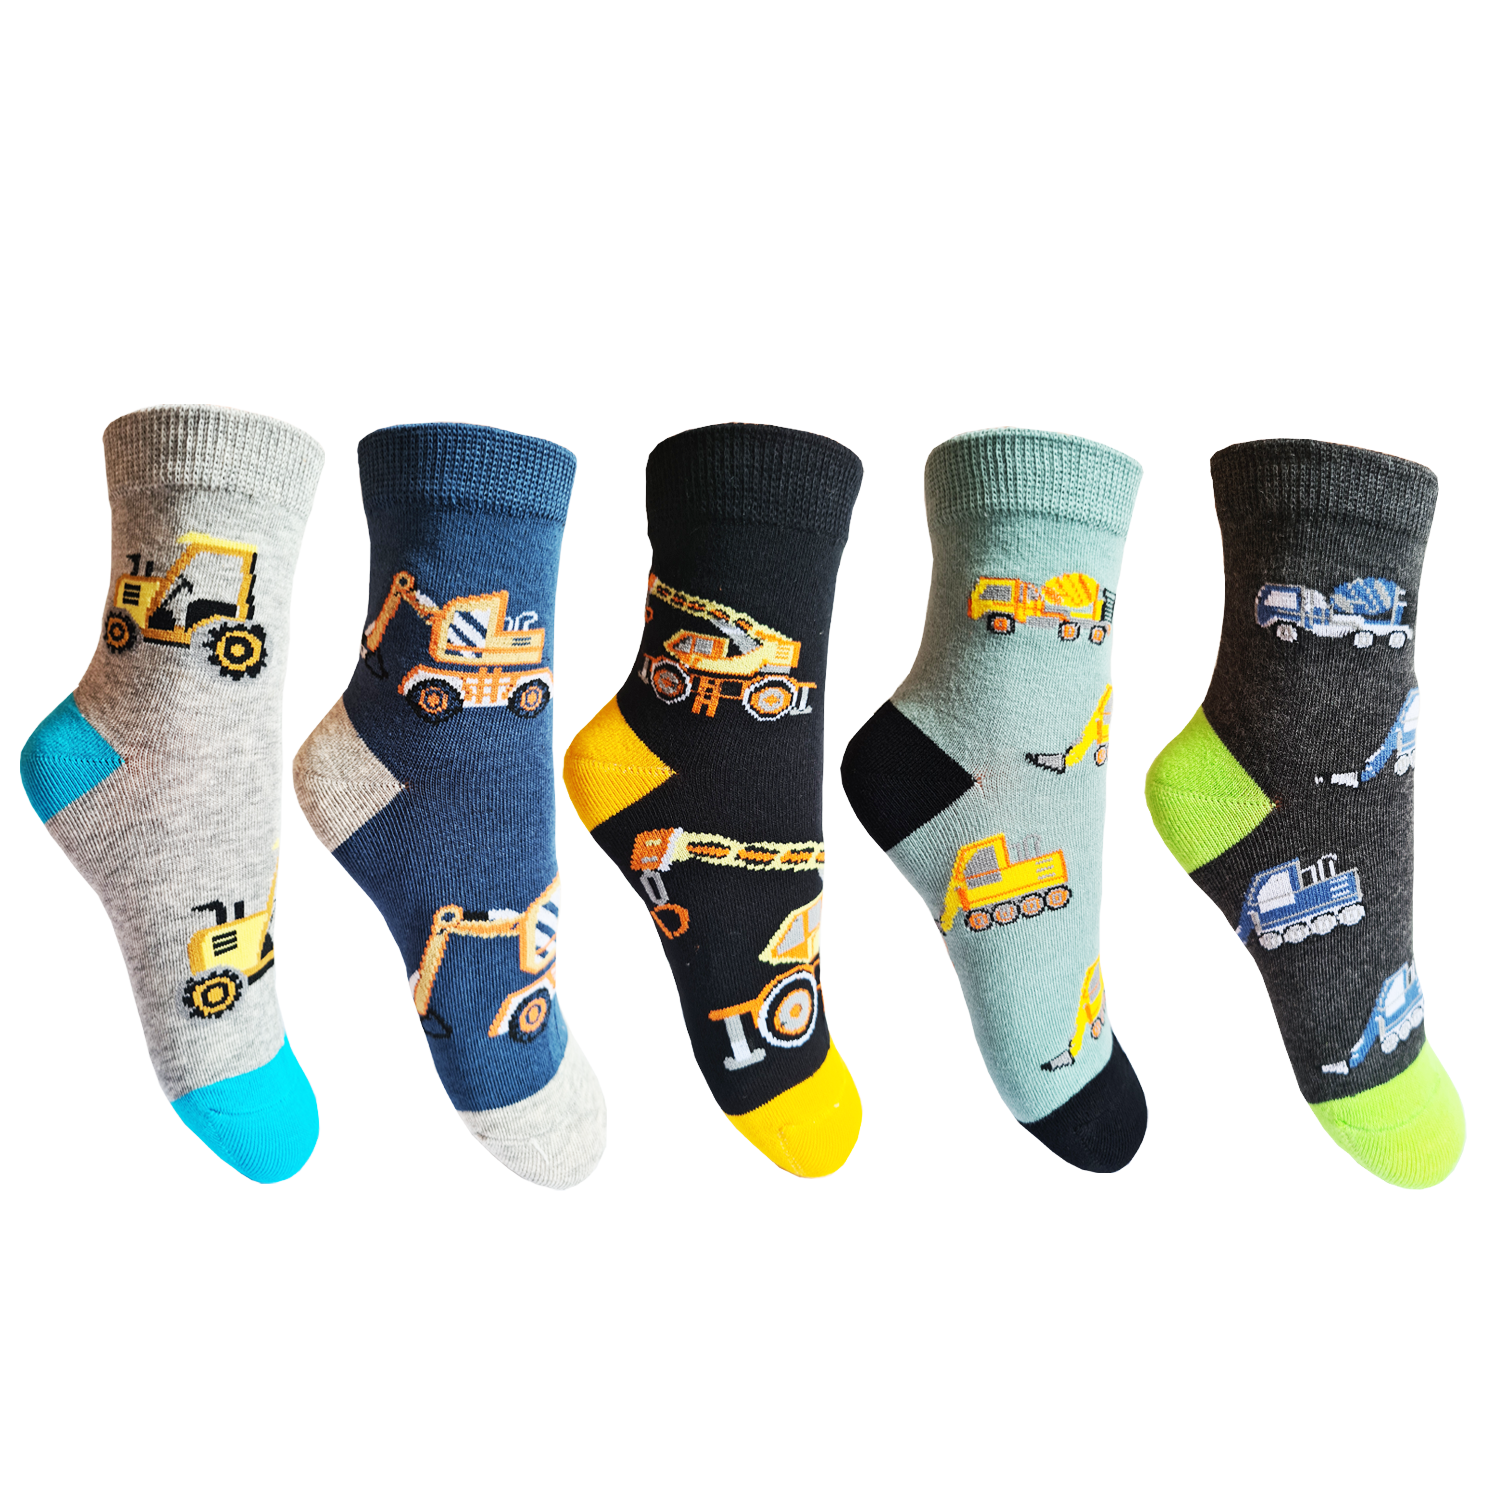 Chlapecké ponožky Aura.Via - GZF9260, mix barev Barva: Mix barev, Velikost: 24-27